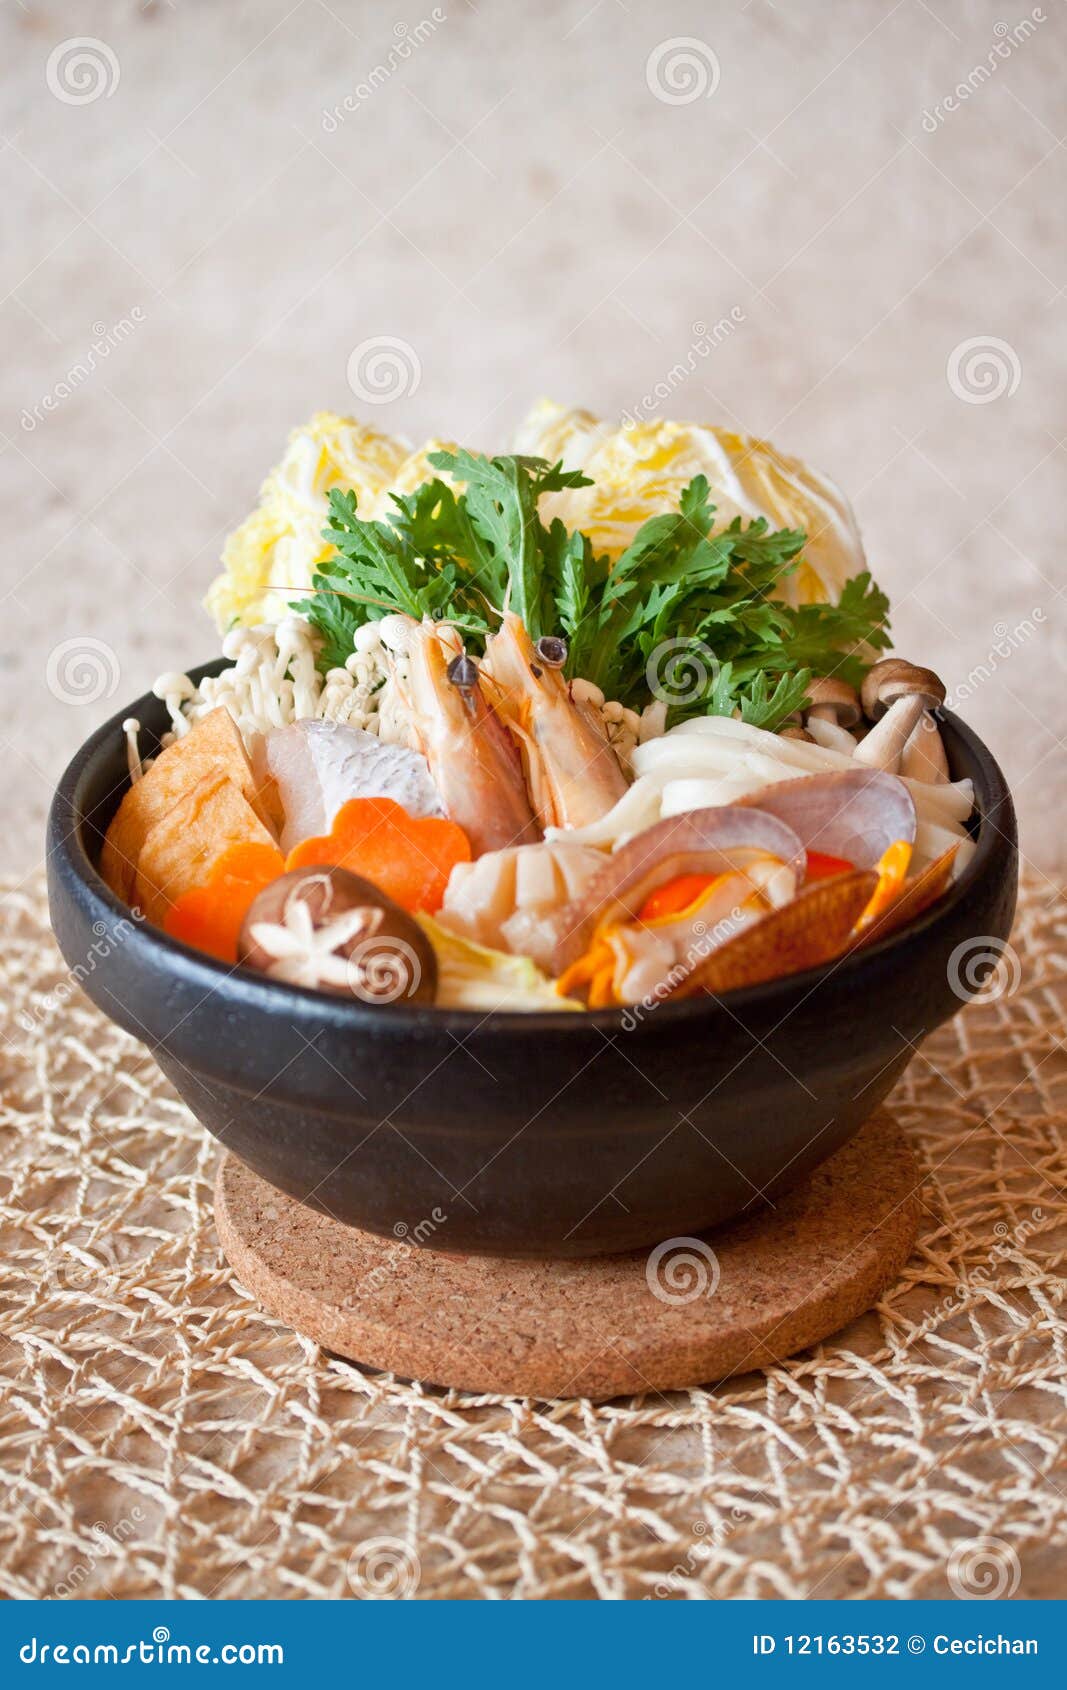 https://thumbs.dreamstime.com/z/japanese-seafood-hot-pot-12163532.jpg